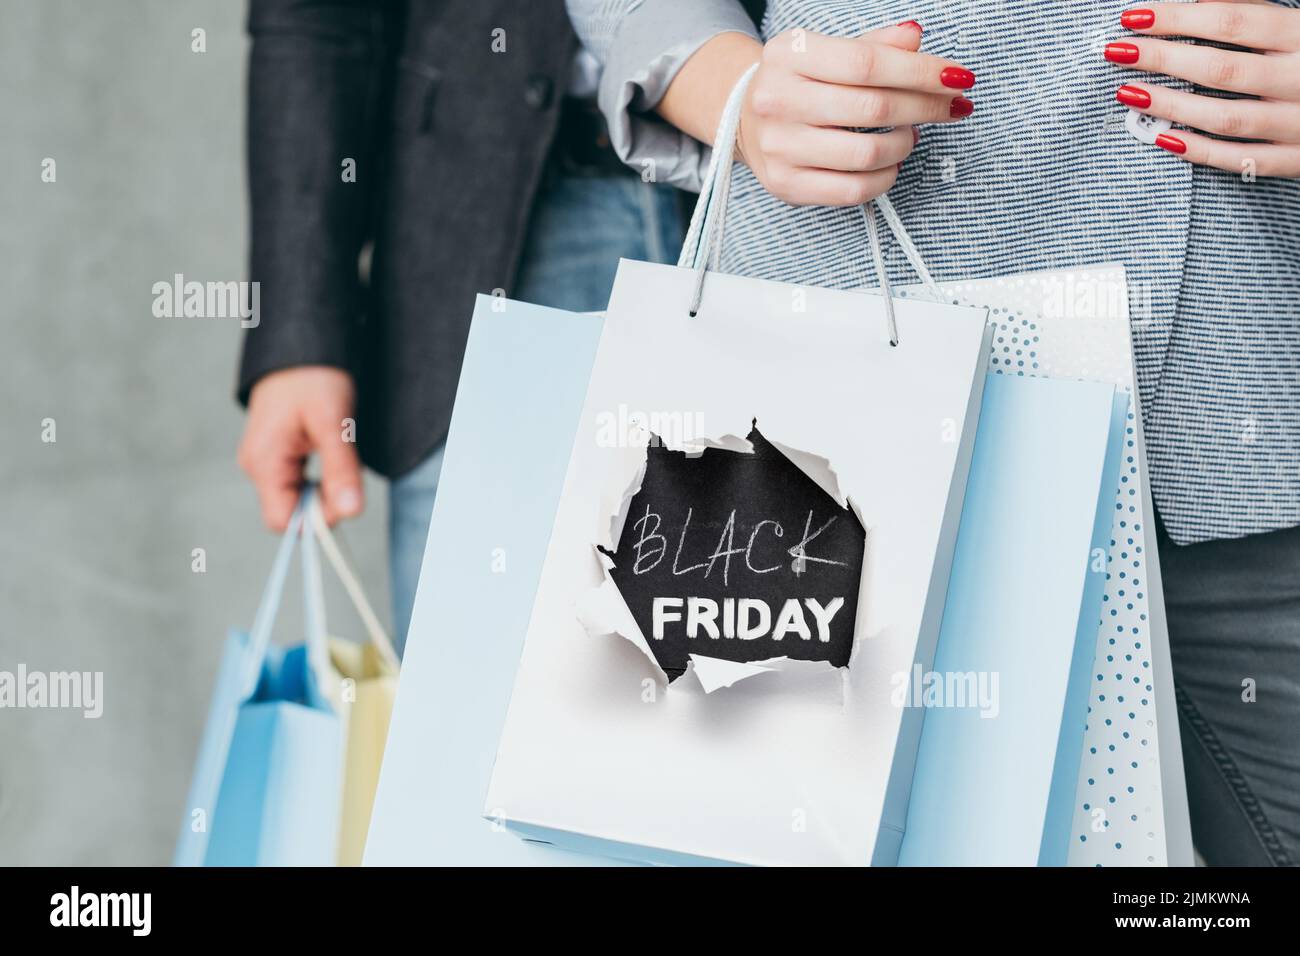 black friday shopping seasonal sale consumerism Stock Photo